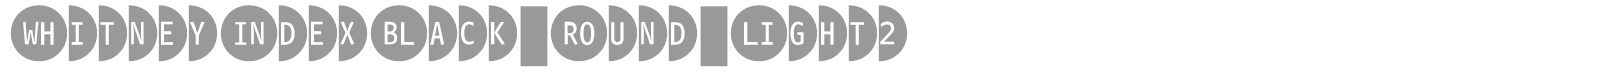 WhitneyIndexBlack-Round-Light2 font preview